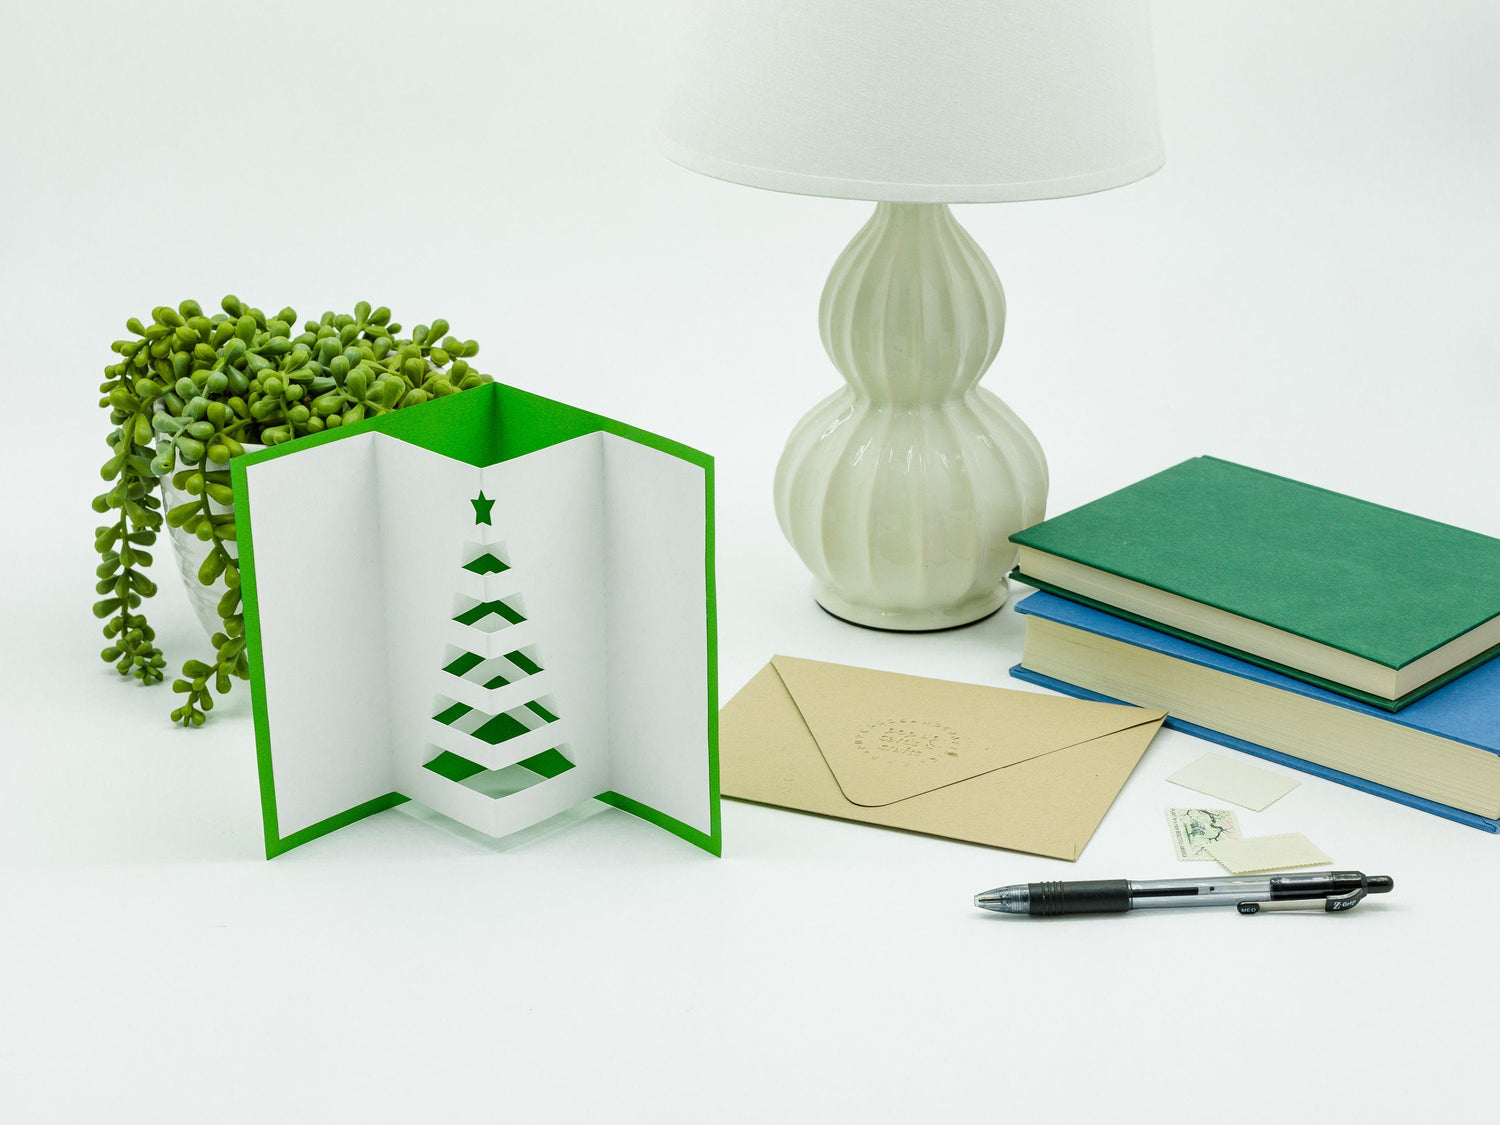 Bulk Set of 12 Christmas Tree Modern Pop Up 3D Greeting Card